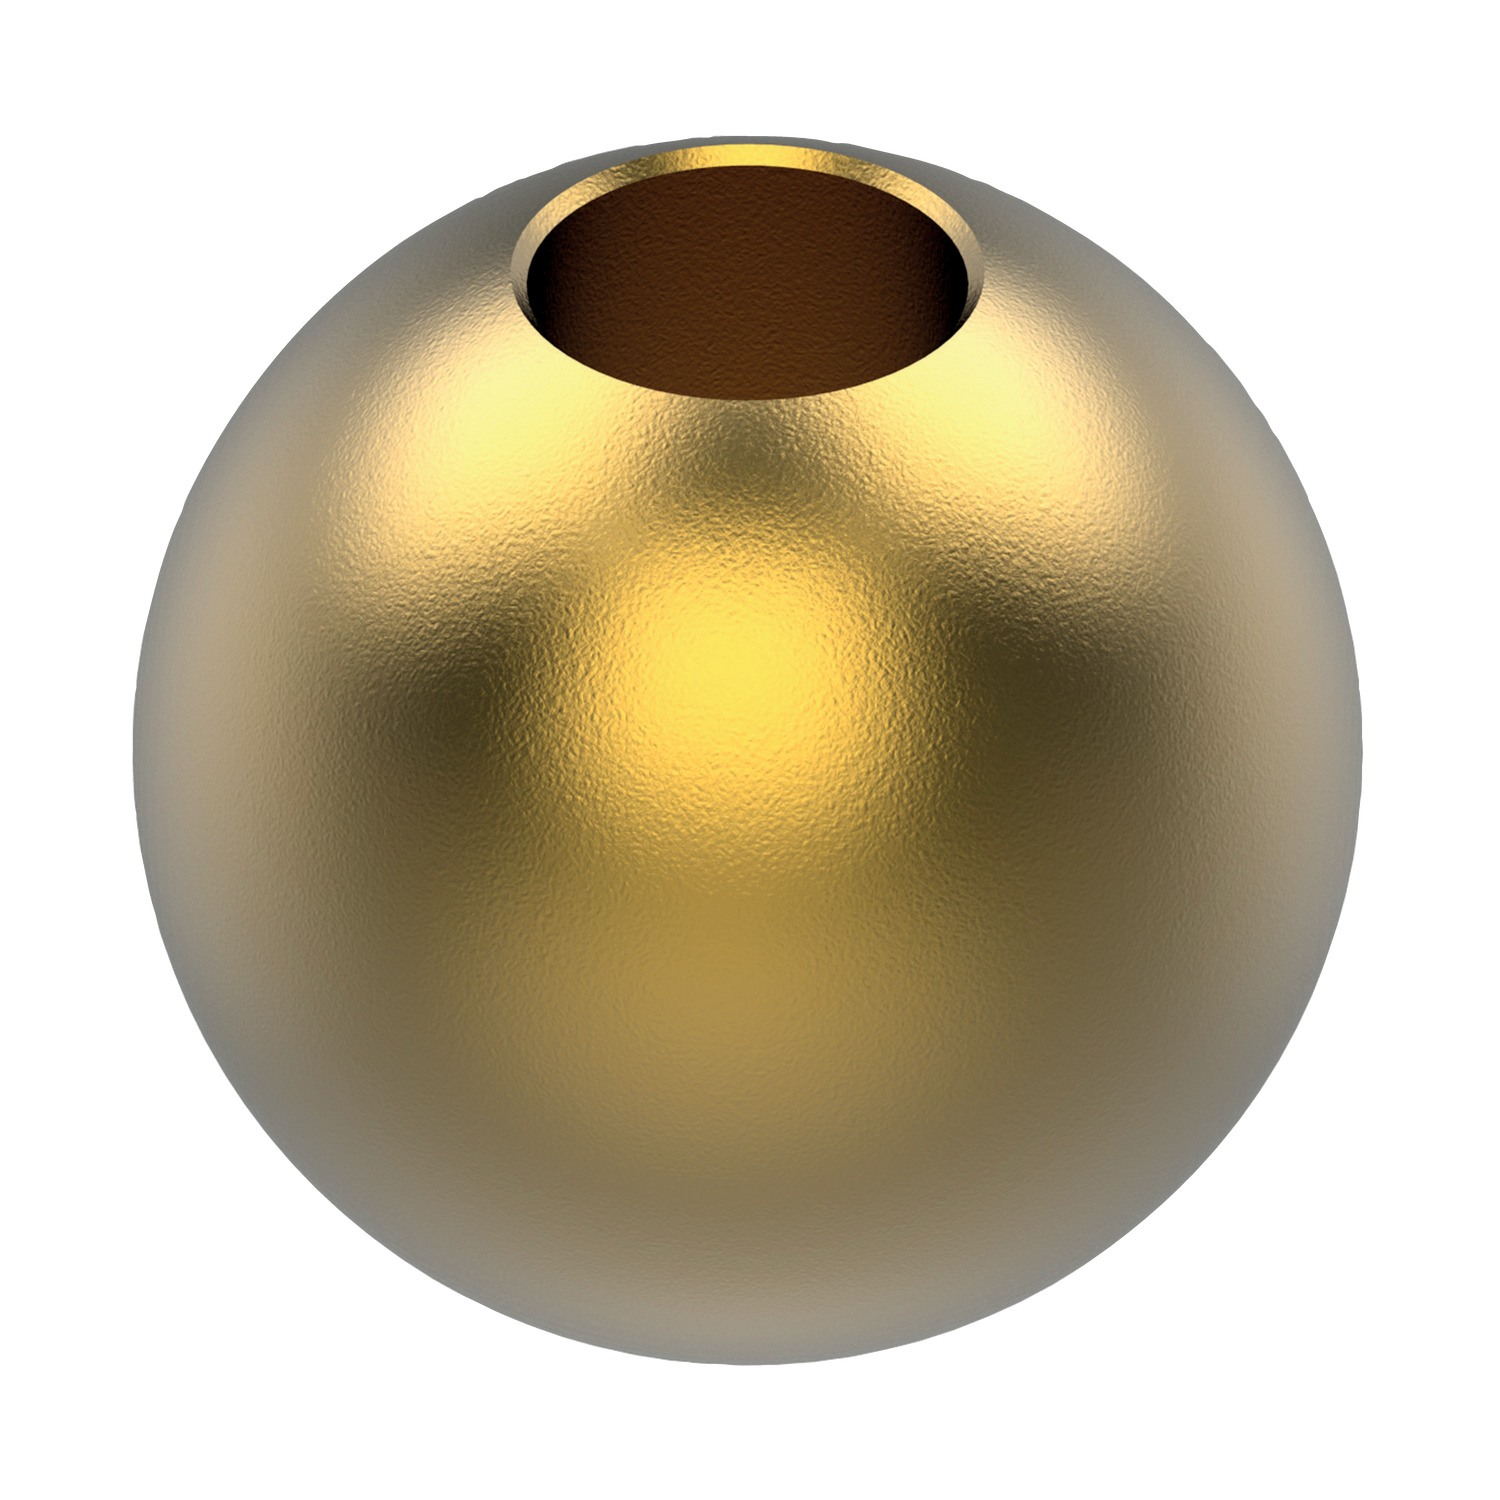 20070 - Coolant Nozzles - Brass Ball